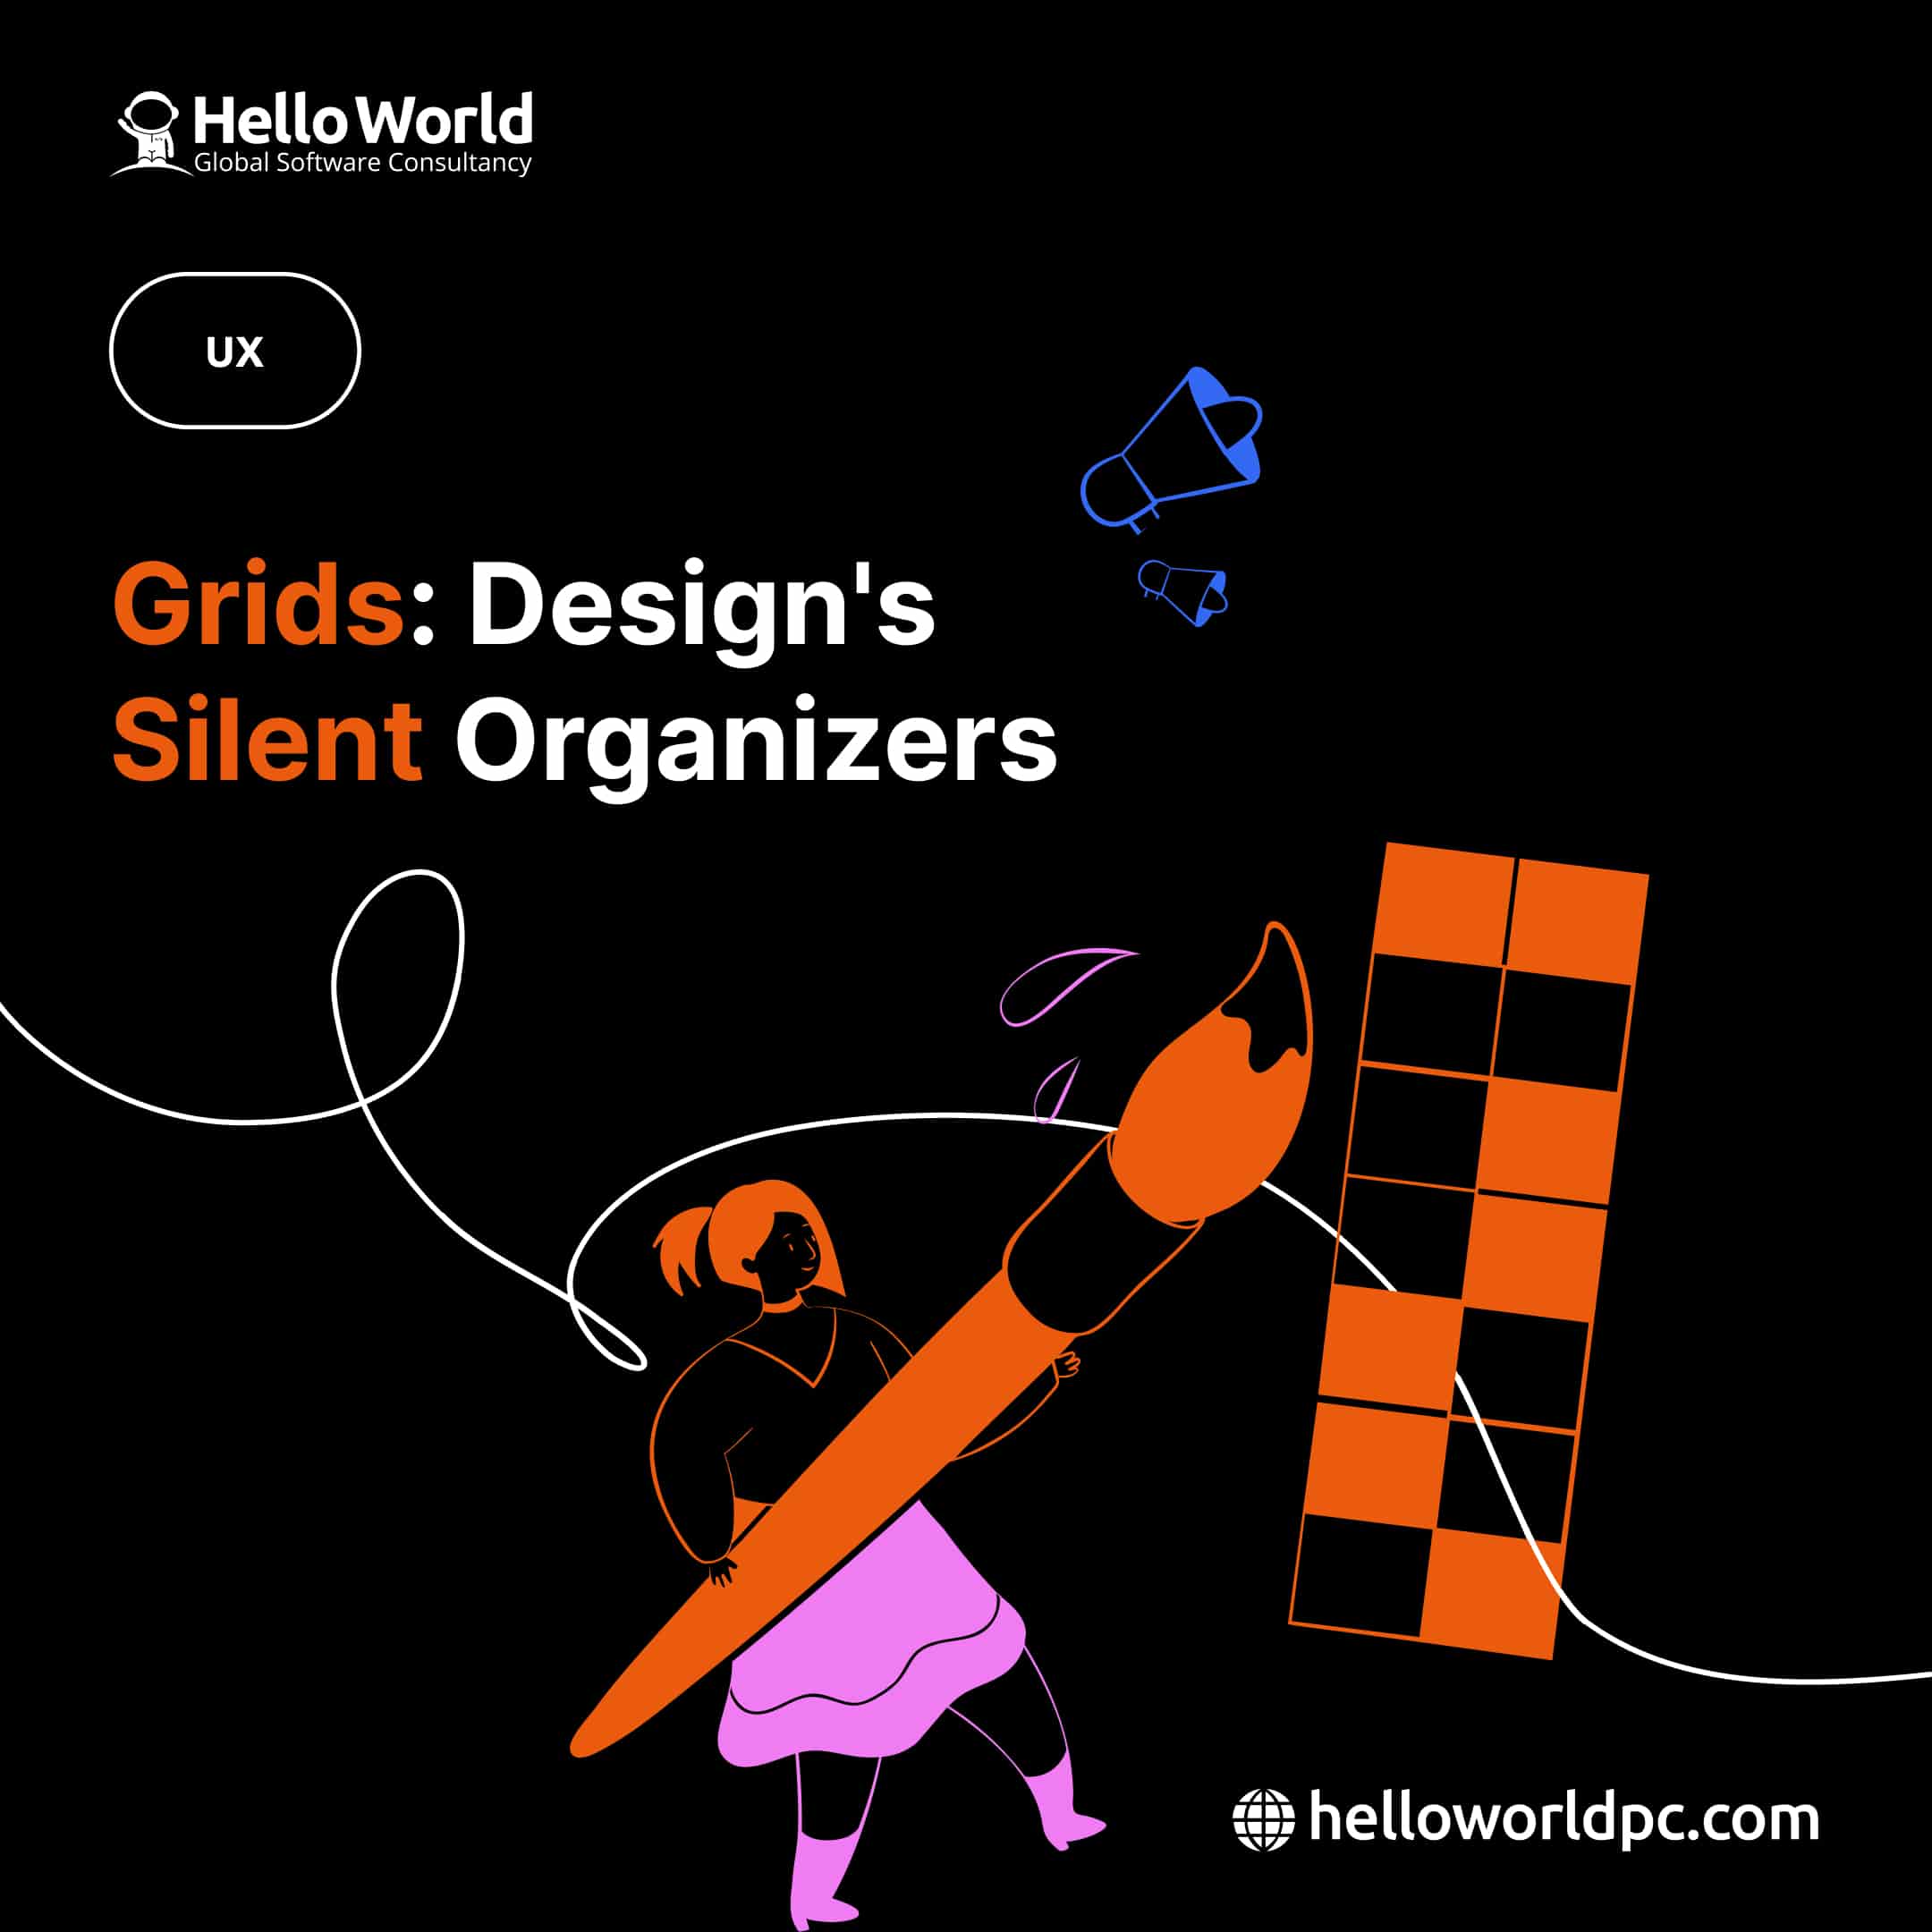 Grids: Design's Silent Organizers